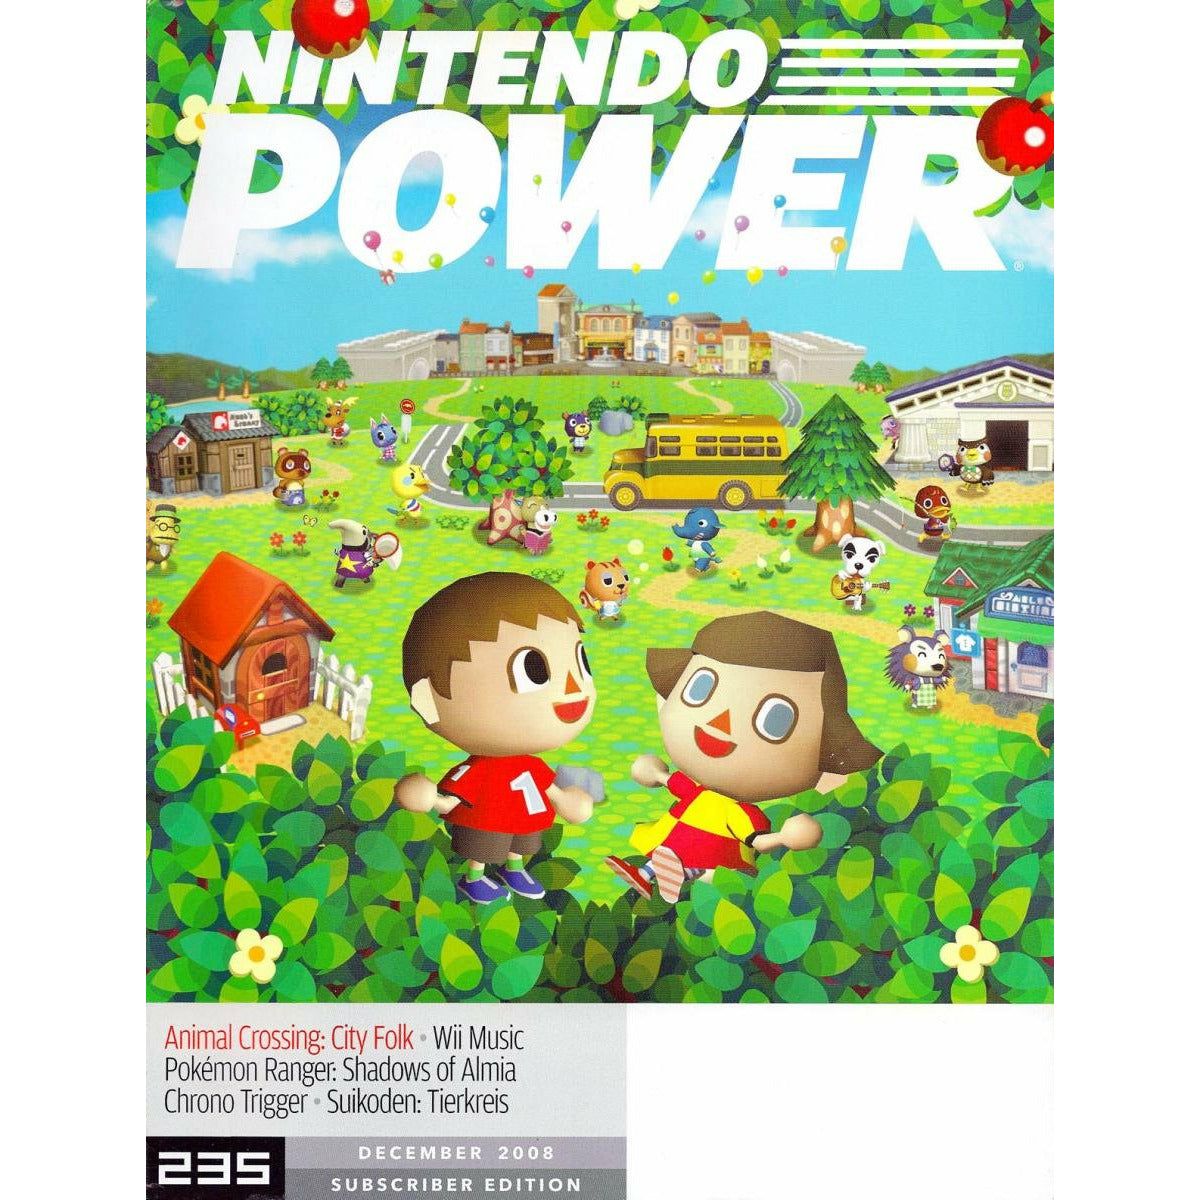 Nintendo Power Magazine (#235 Subscriber Edition) - Complet et/ou bon état